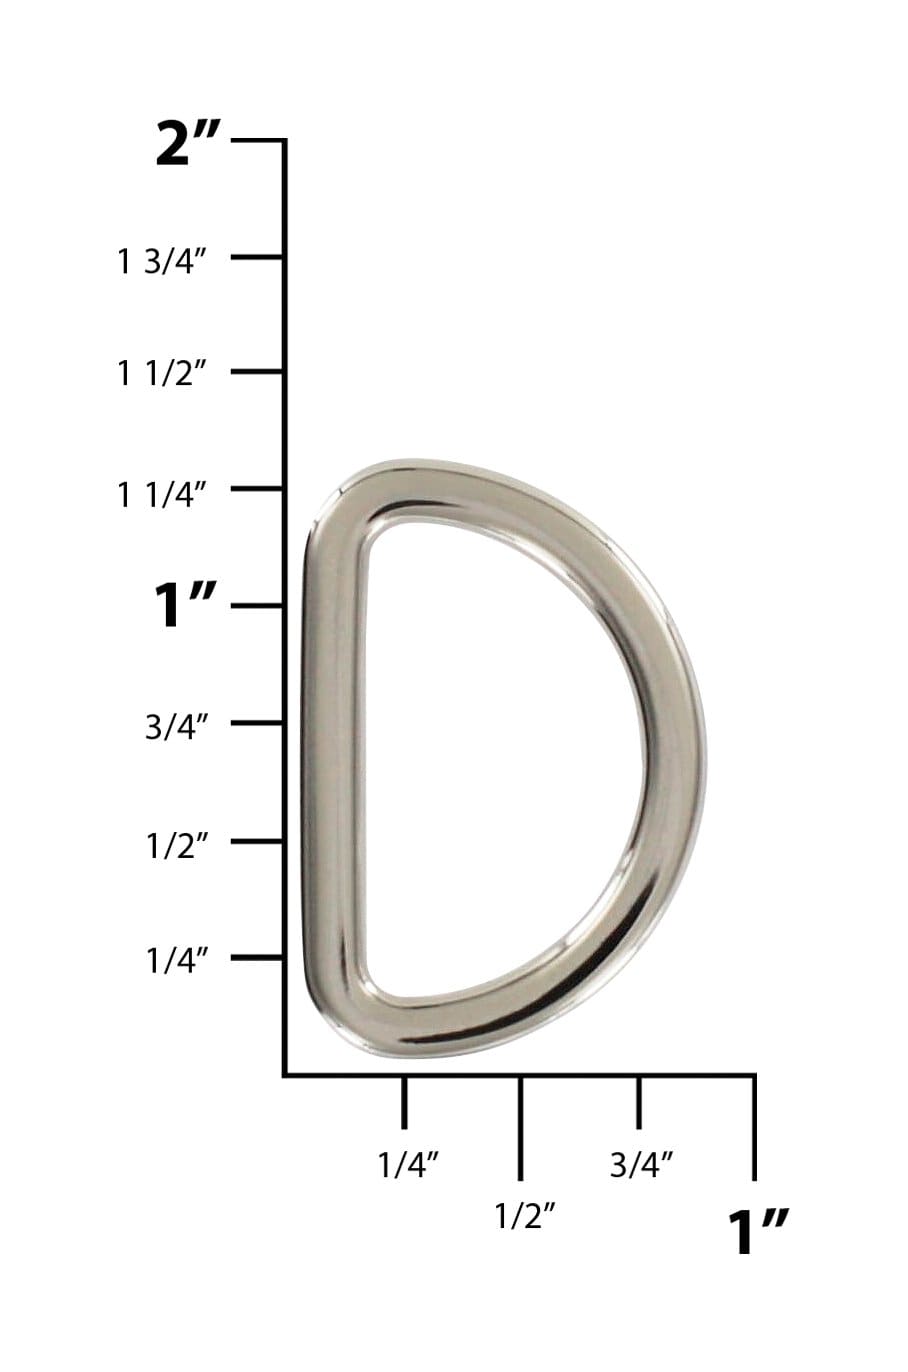 Ohio Travel Bag Rings & Slides 1" Nickel, Flat Cast D Ring, Zinc Alloy, #P-2561-NIC P-2561-NIC